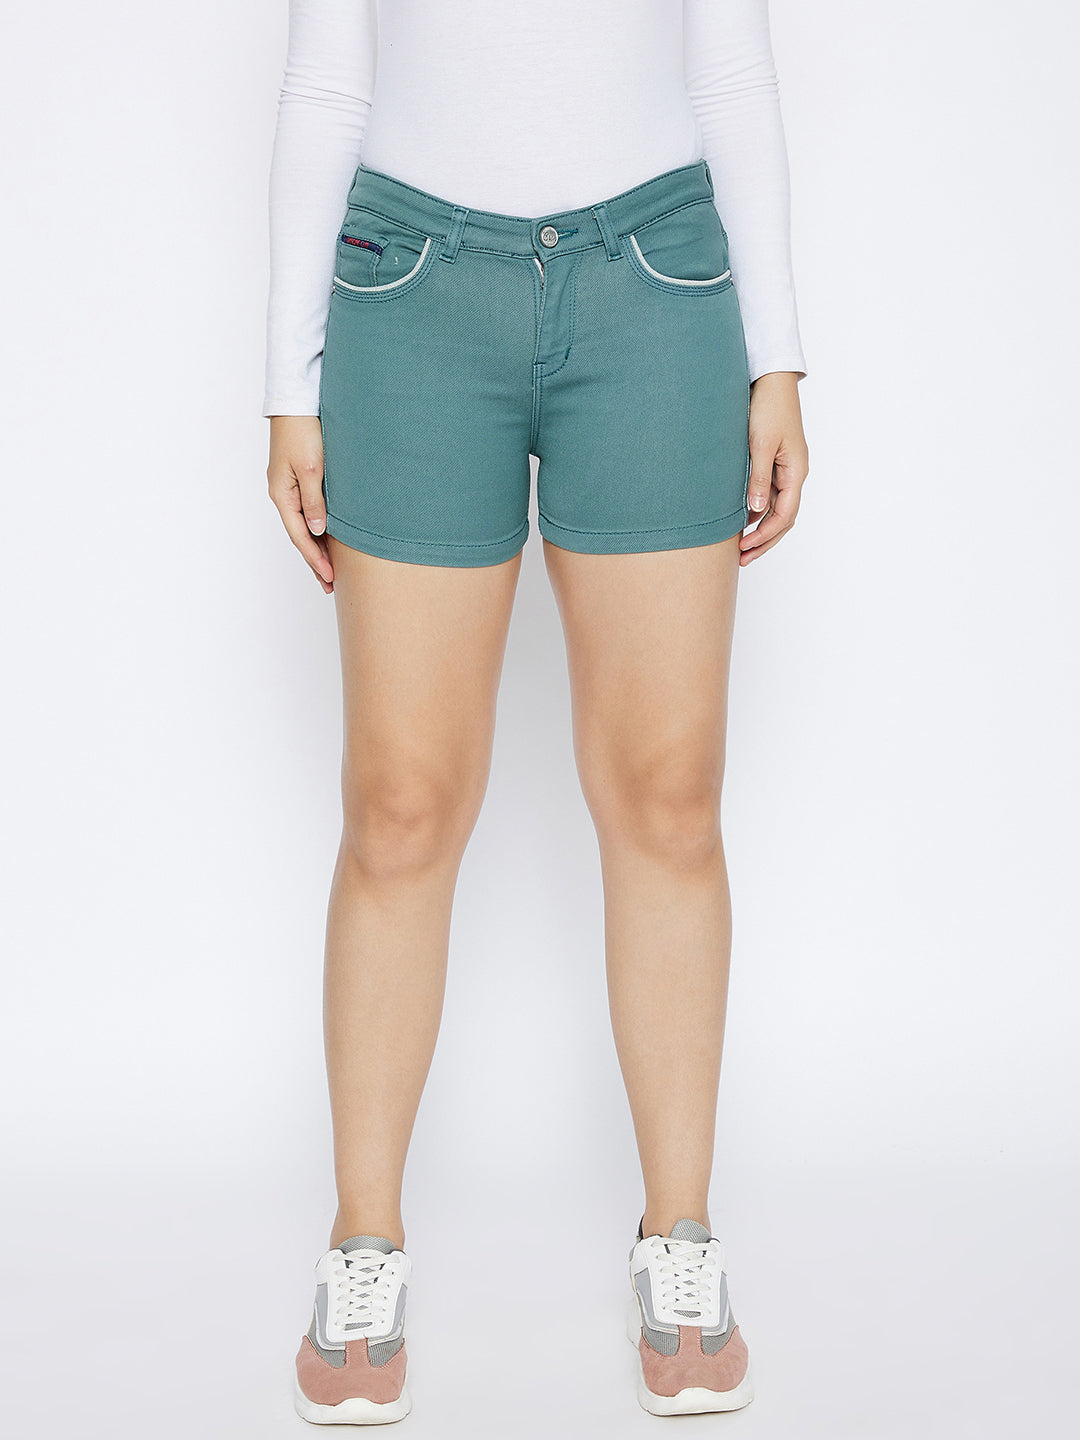 Green Slim Fit Denim Shorts - Women Shorts